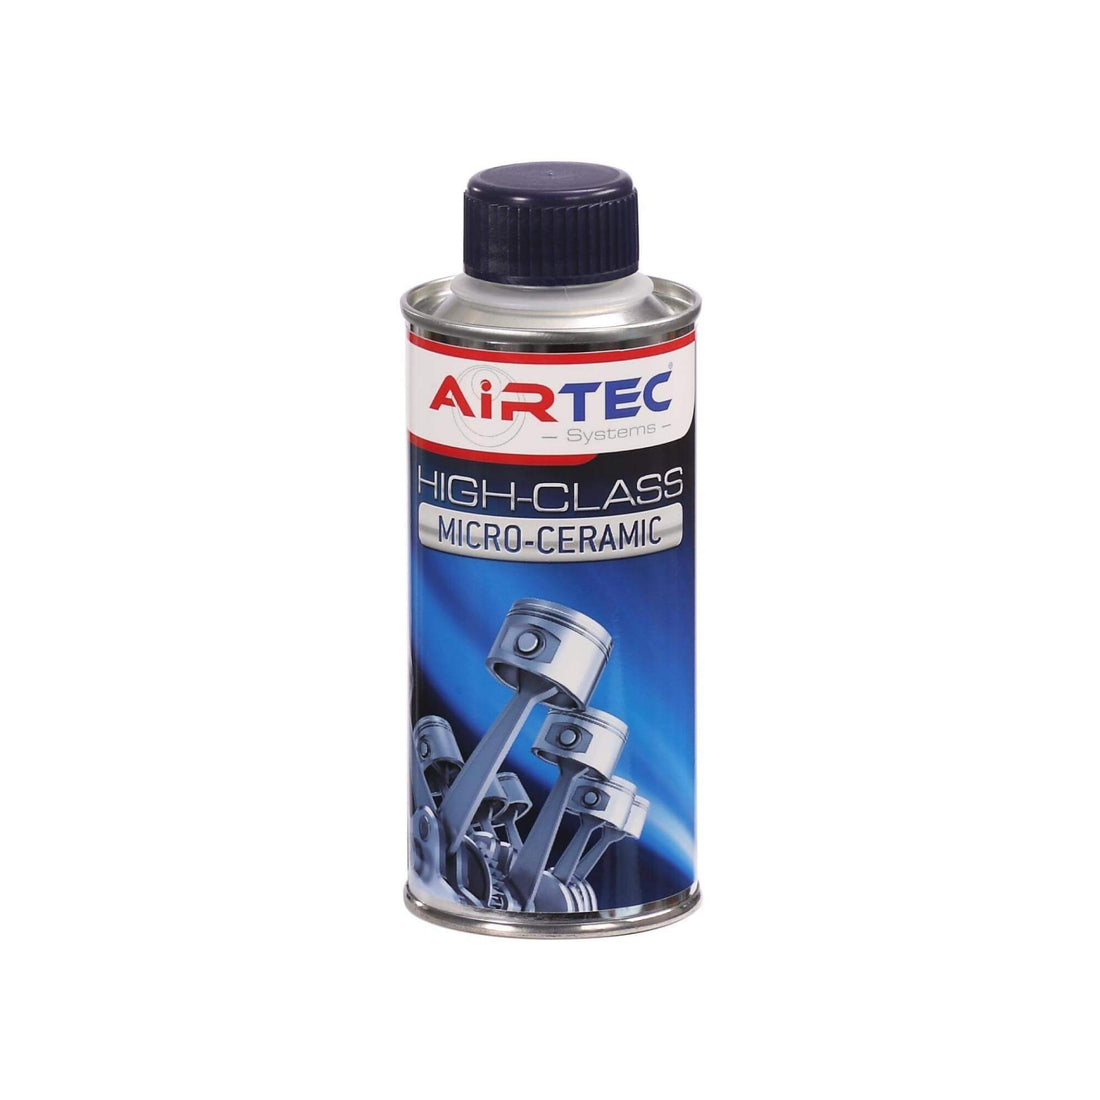 Air-Tec High-Class Micro-Ceramic Oil Additive